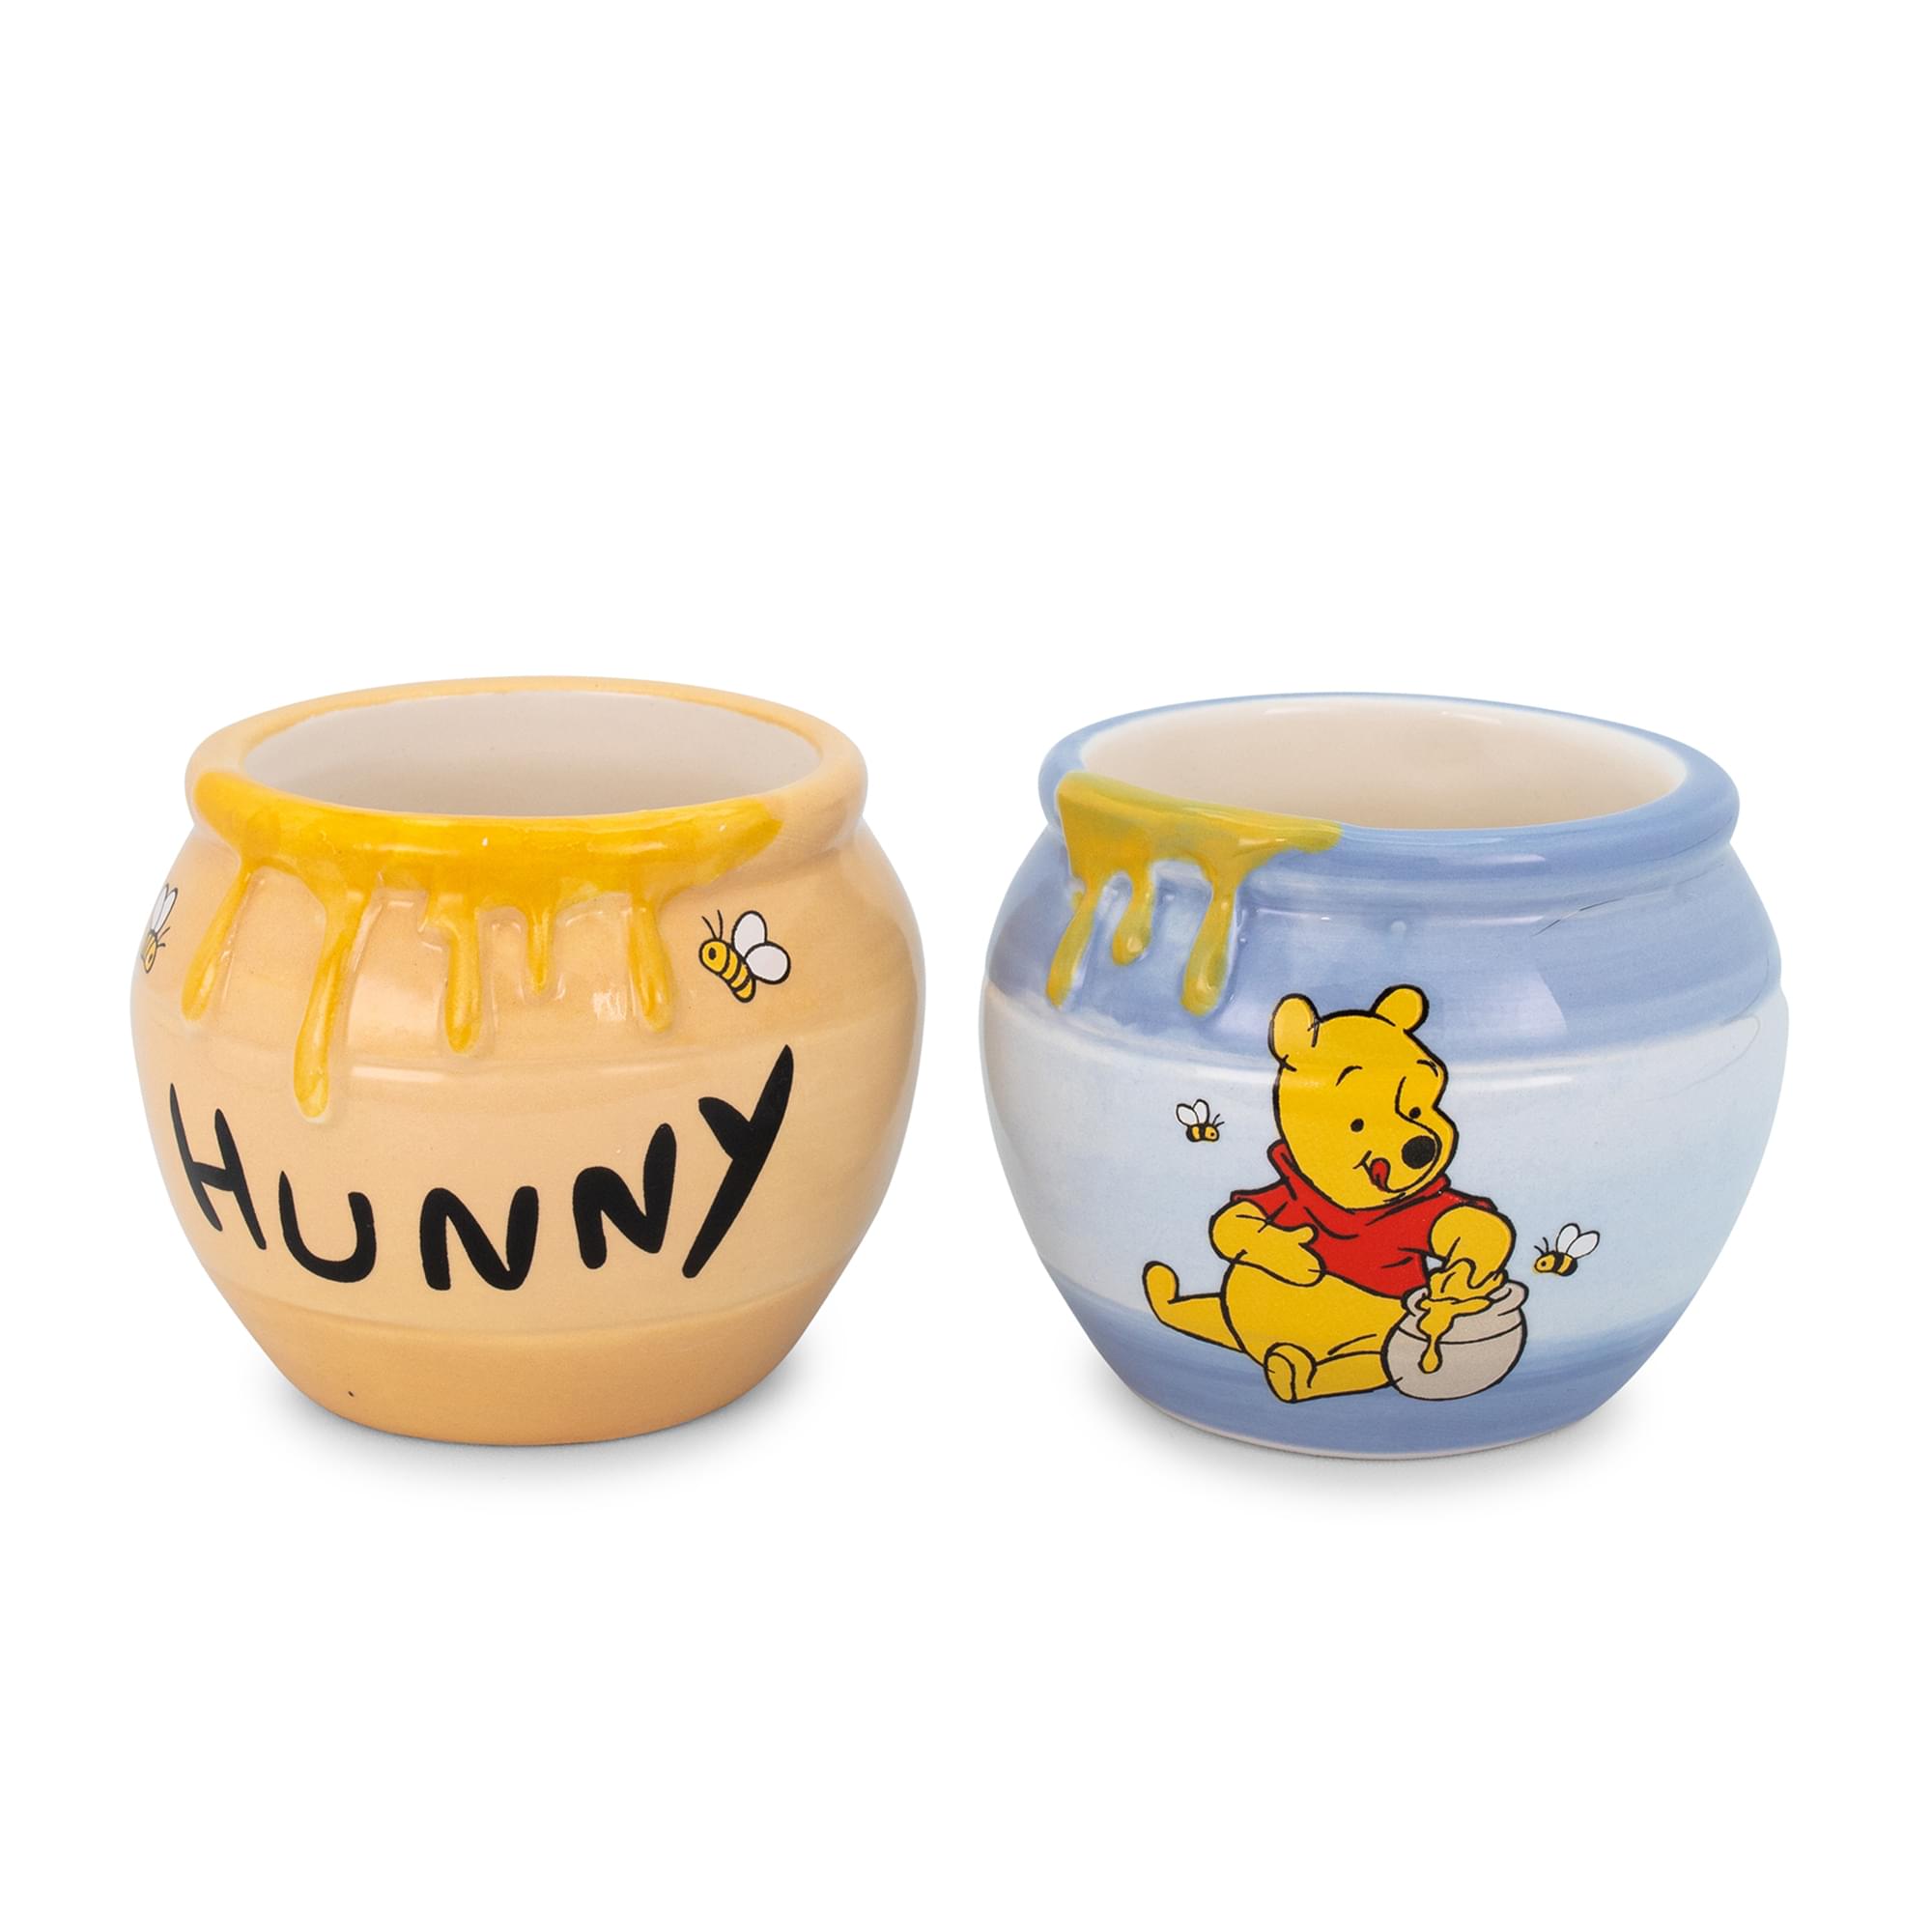 3D Model of Winnie The Pooh Hunny Pot